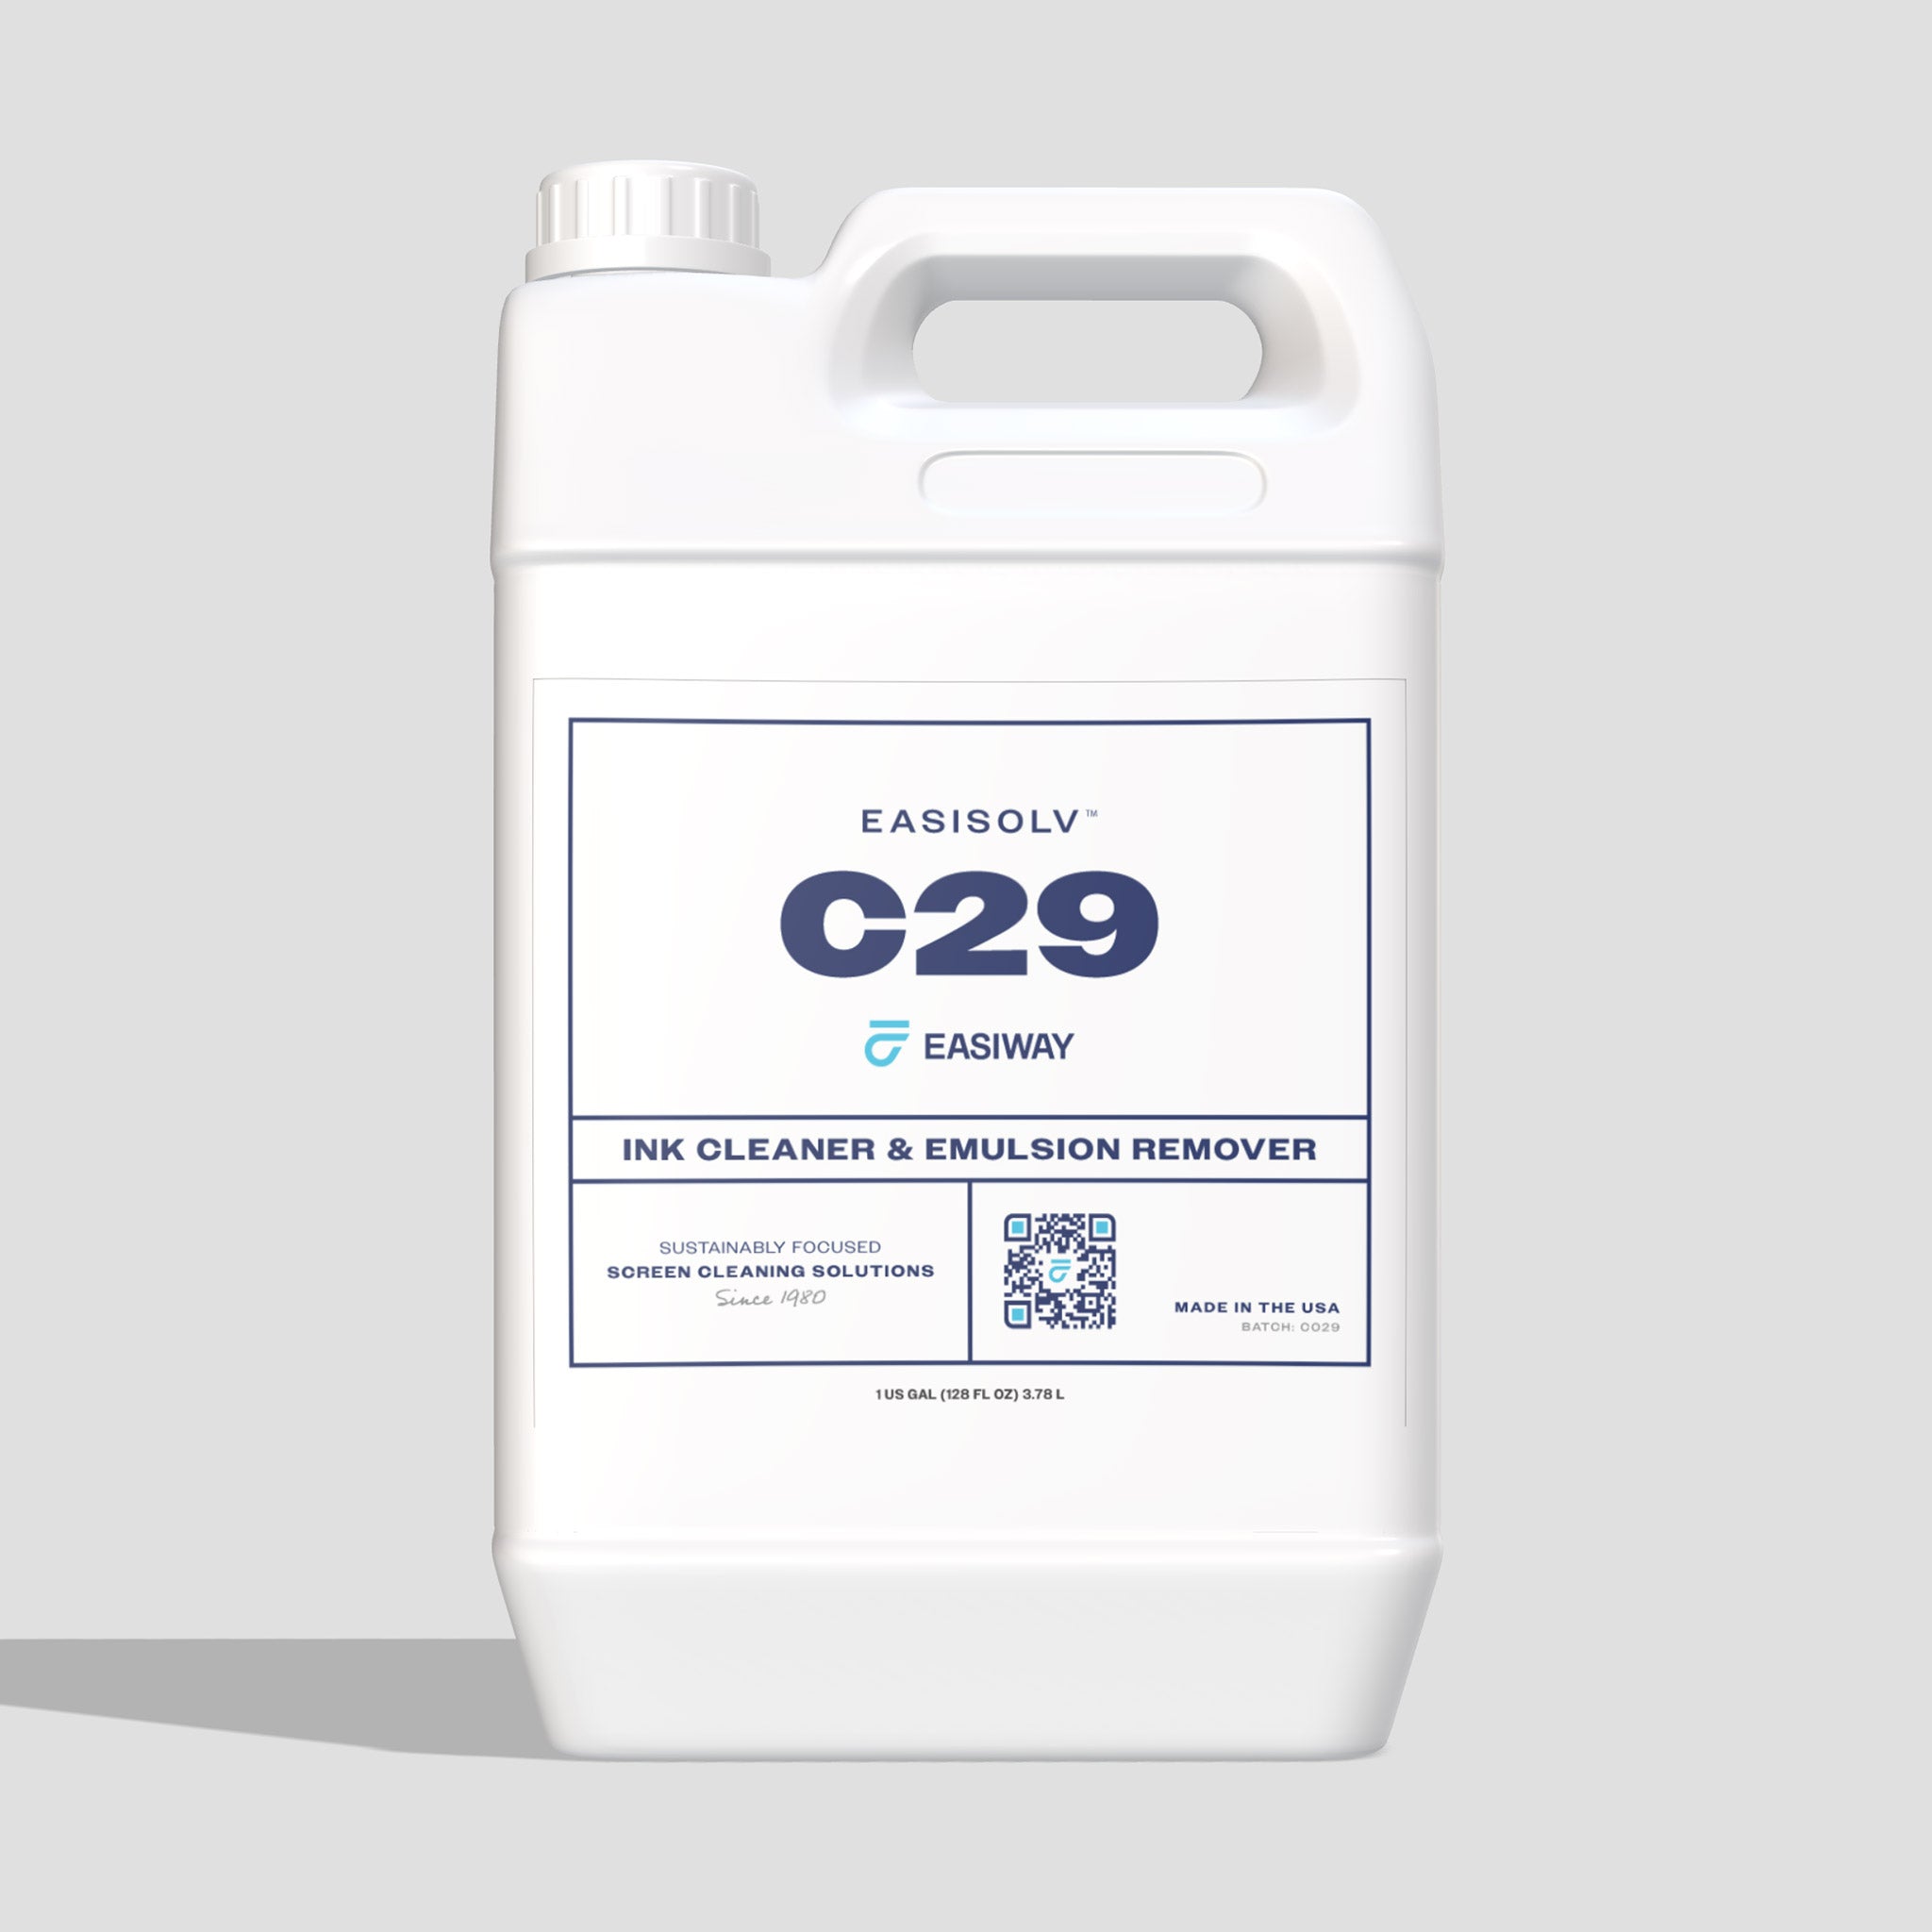 EasiSolv C29 Ink Cleaner & Emulsion Remover